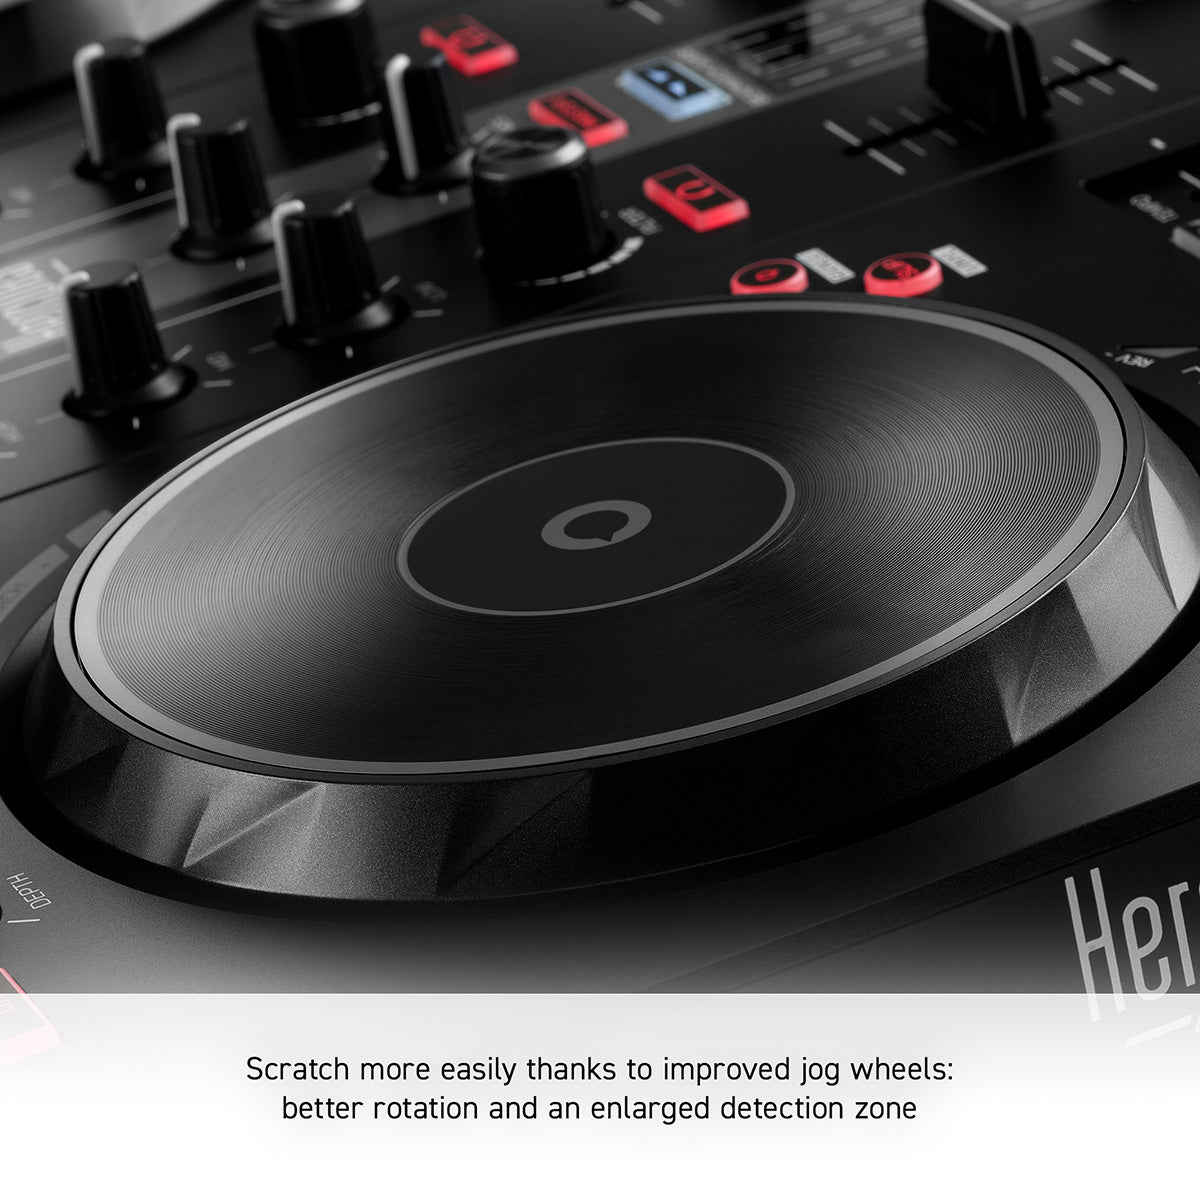 Hercules DJControl Inpulse 300 MK2 DJ Controller